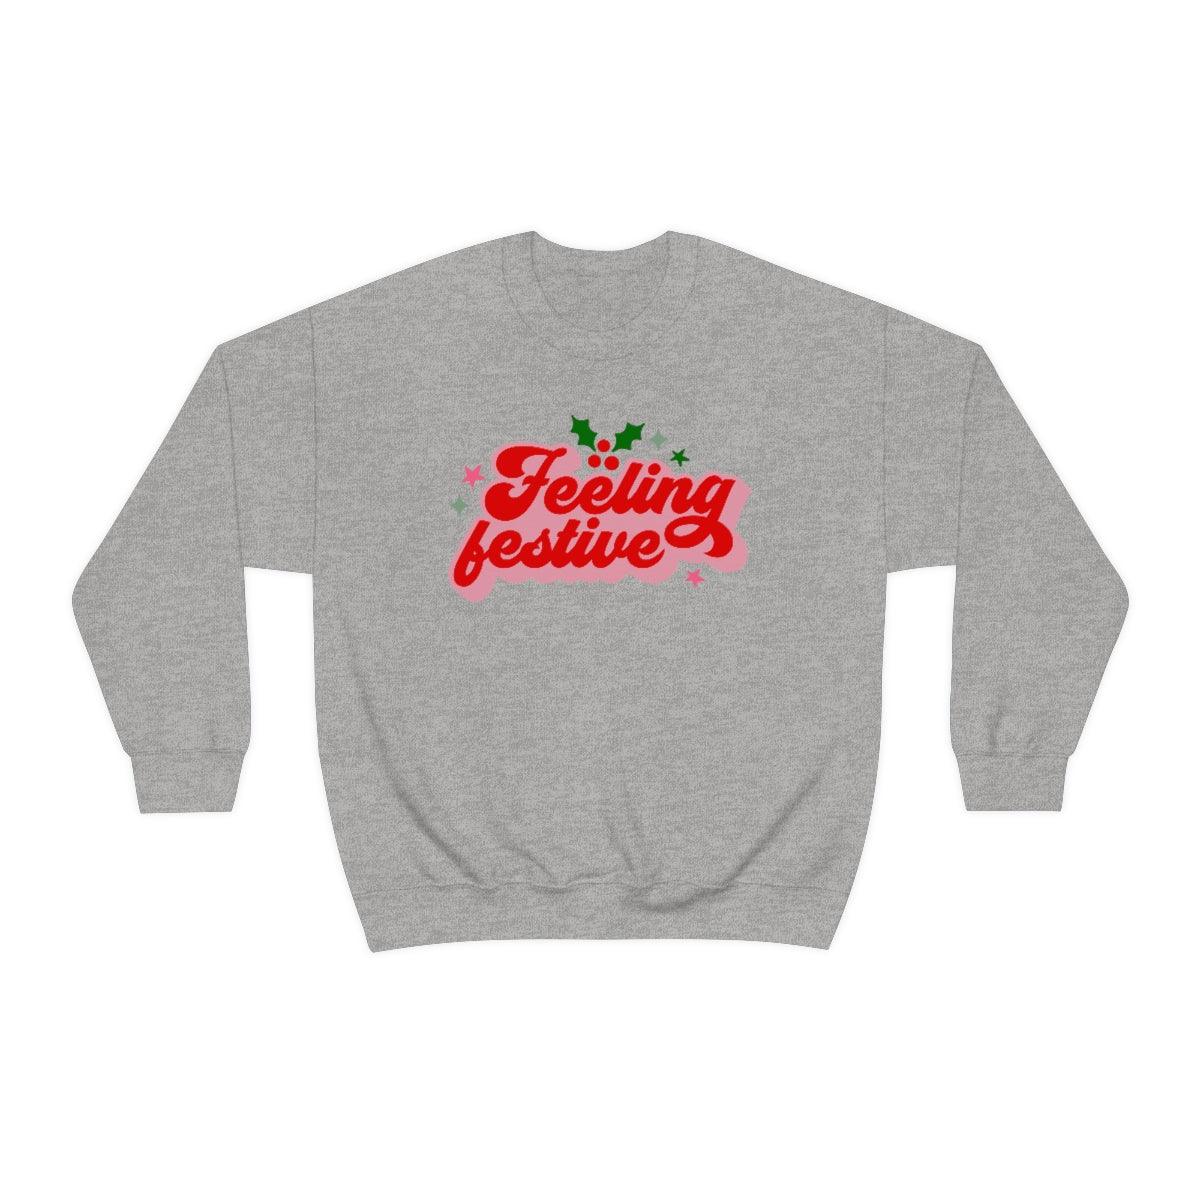 Retro Feeling Festive Christmas Crewneck Sweater